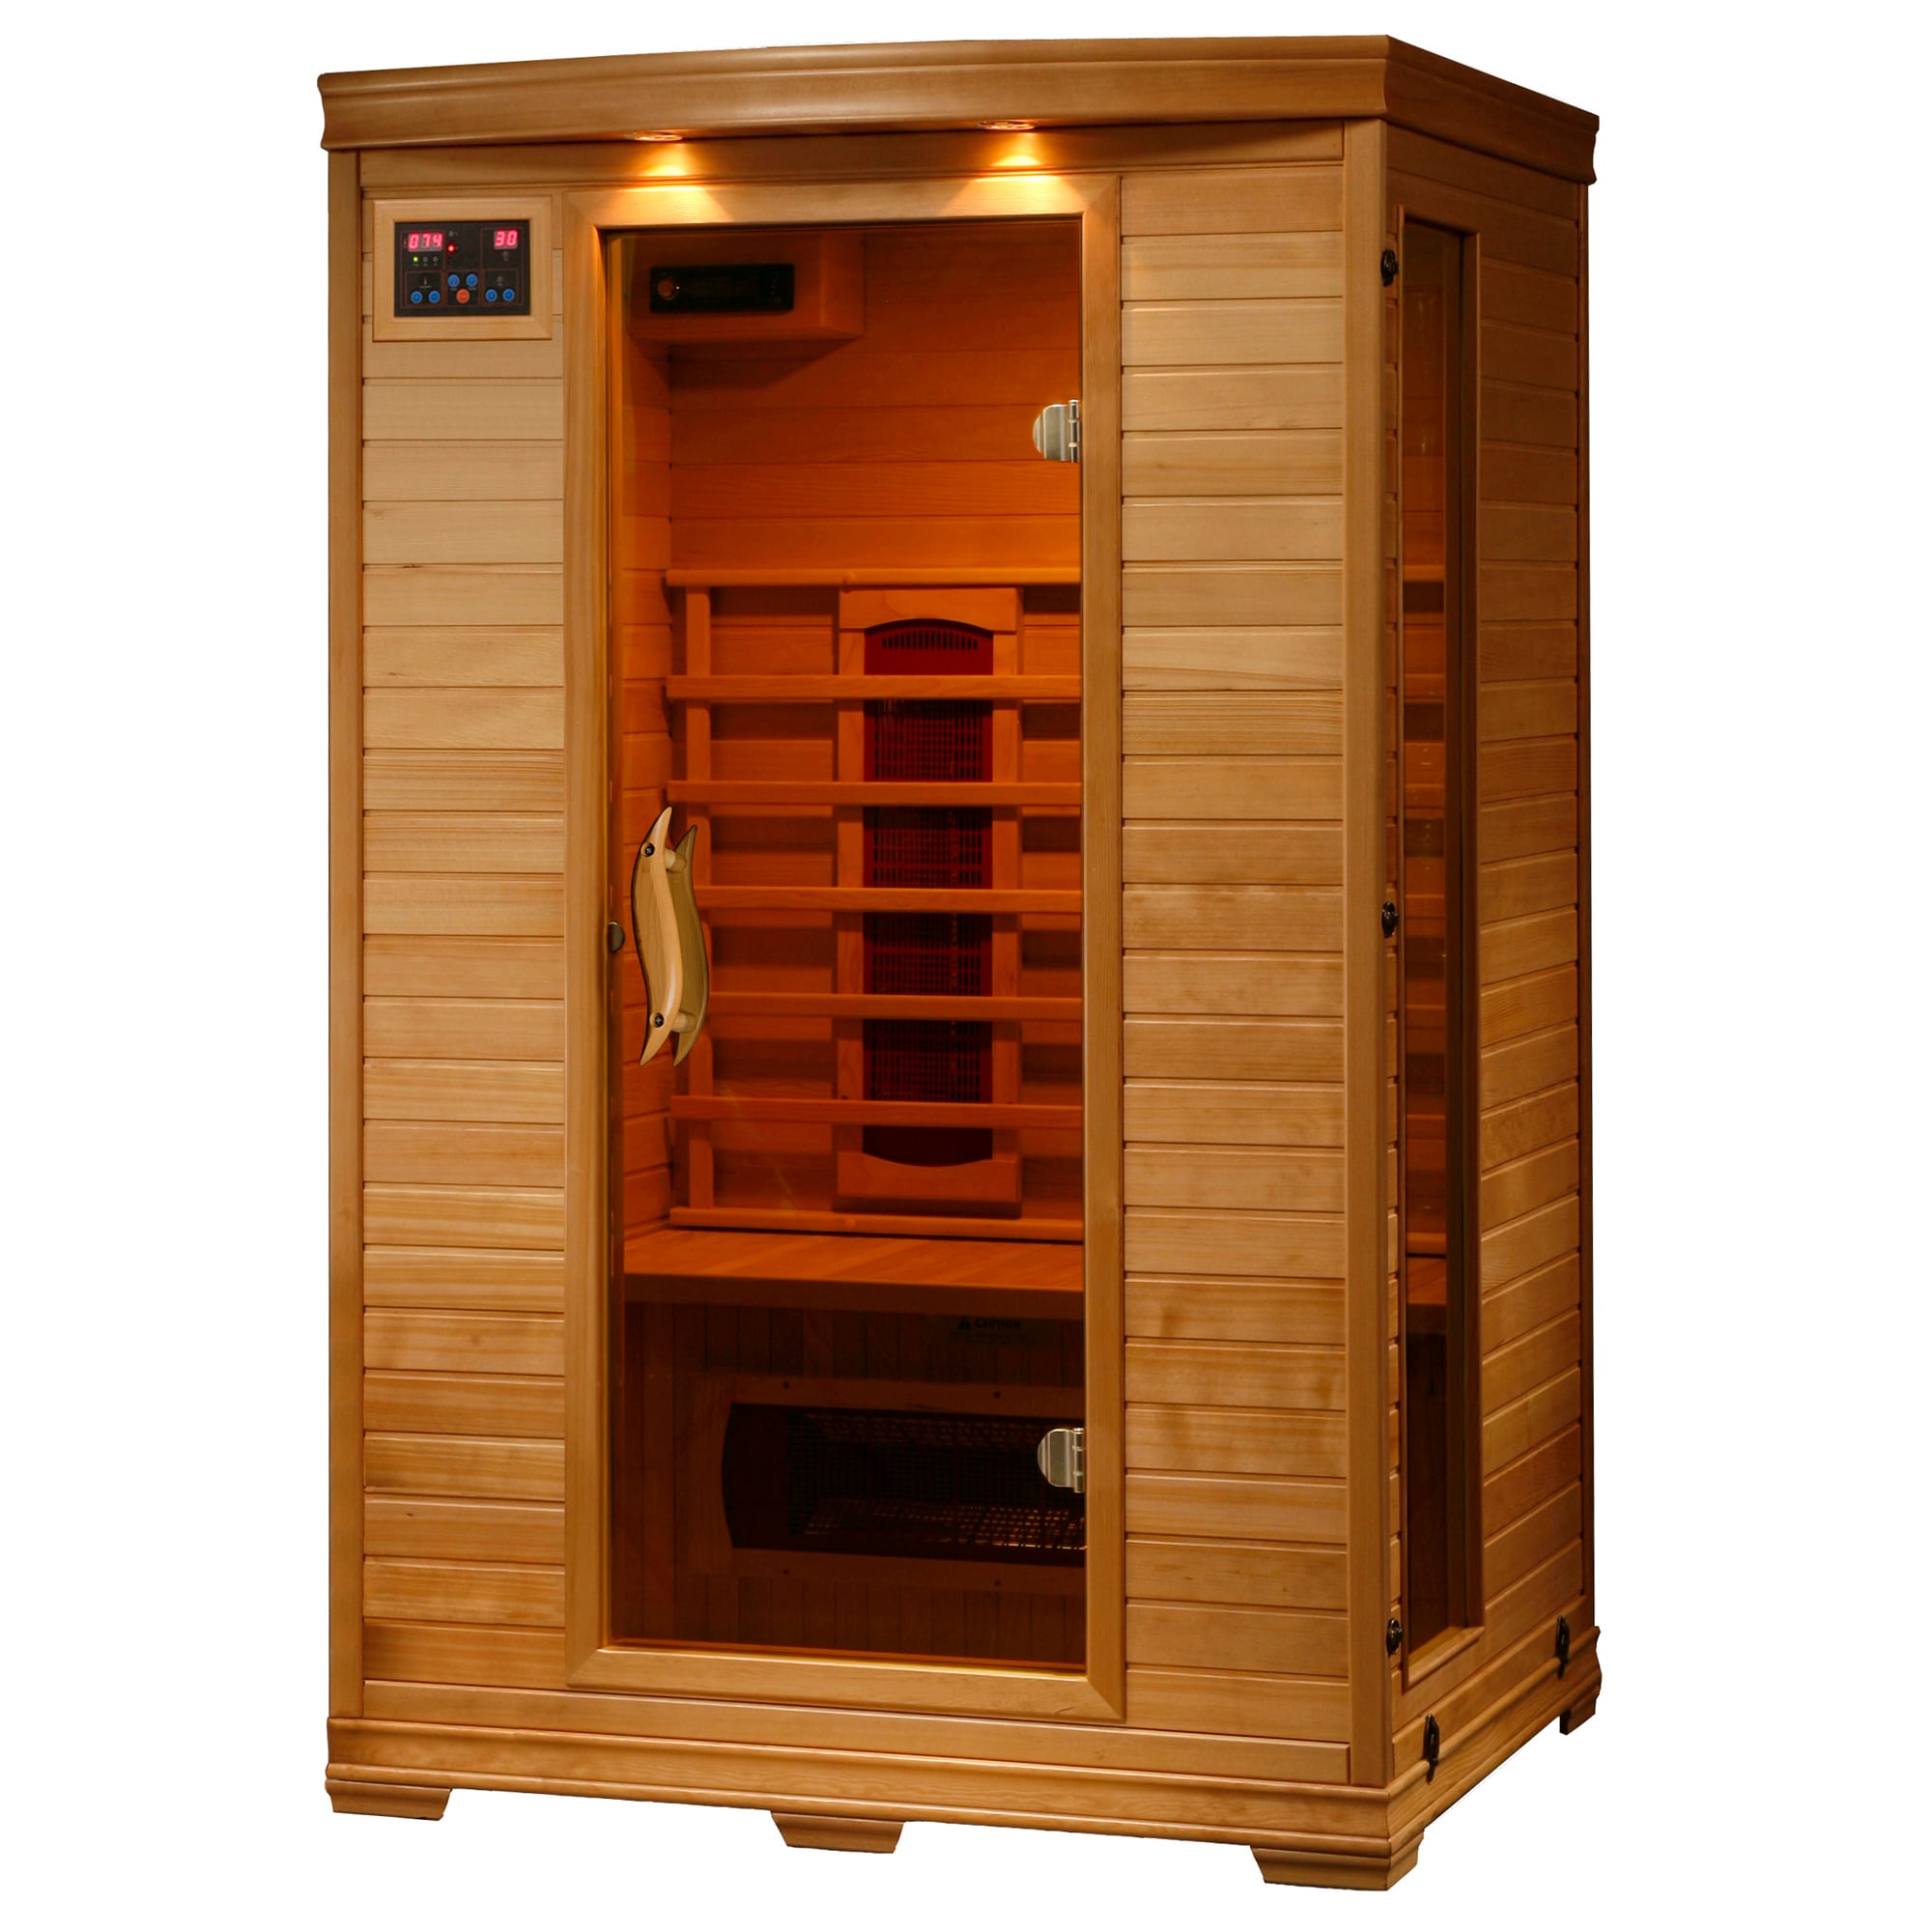 Hemlock fir wood Saunas & Components at 